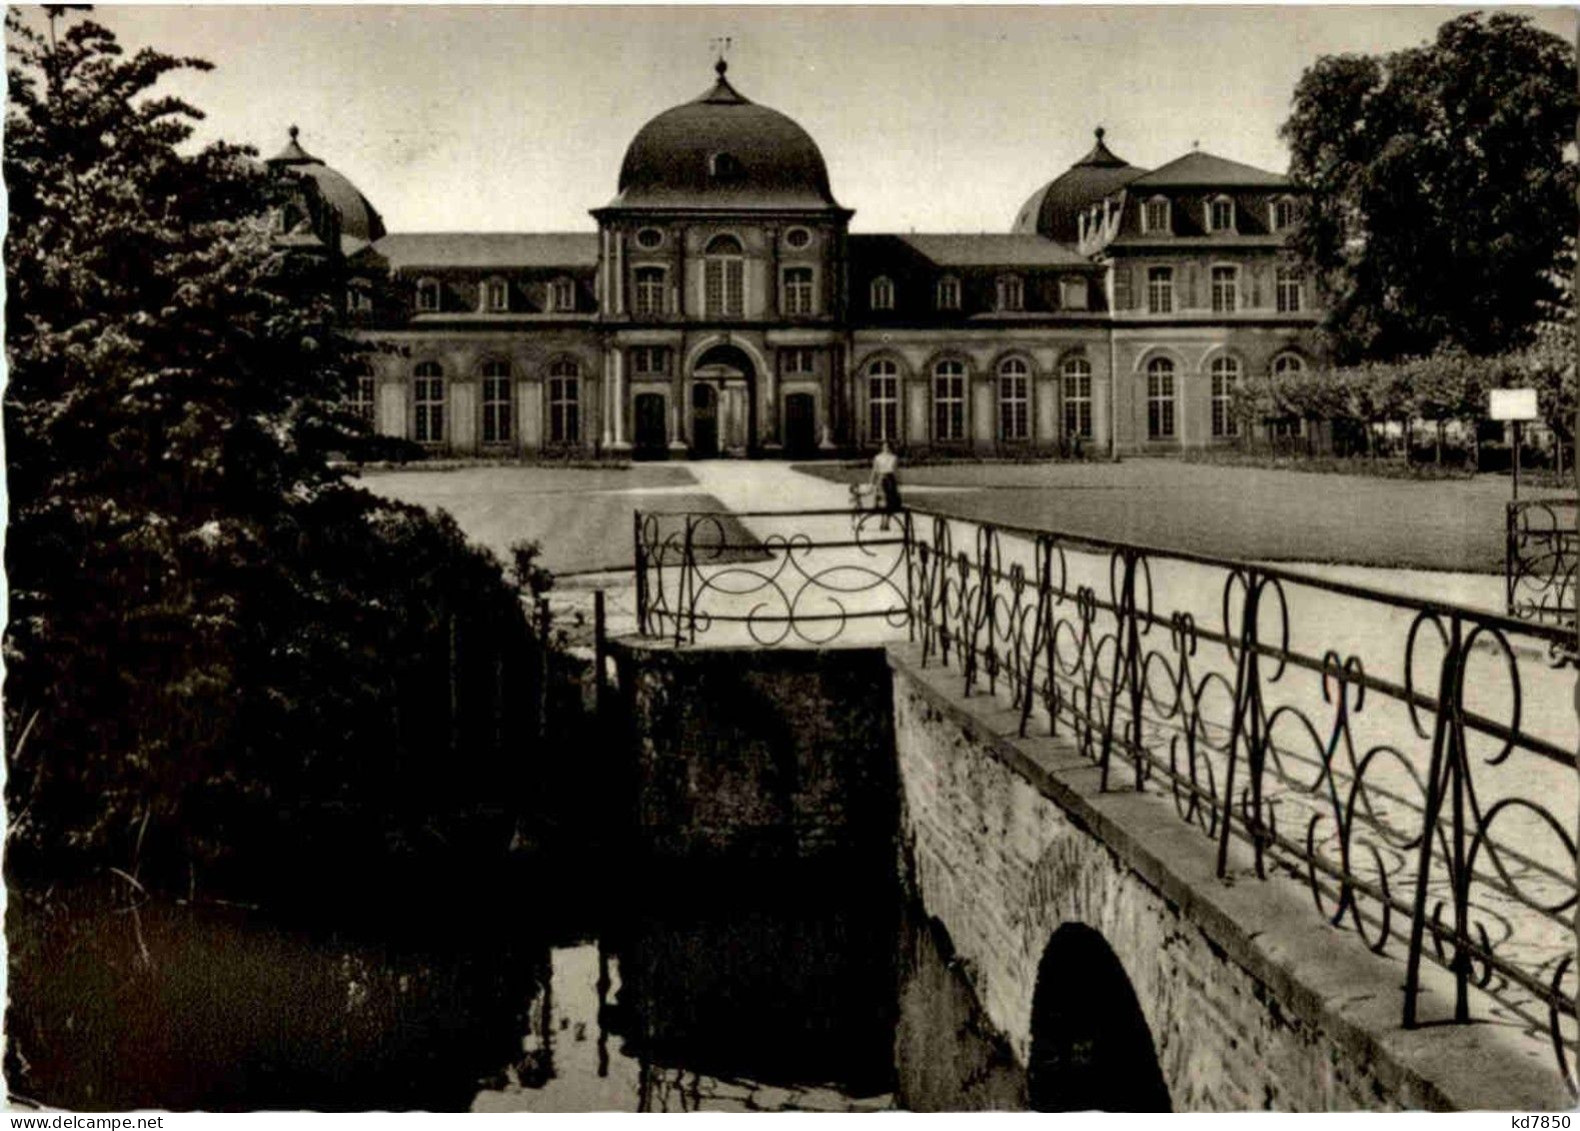 Bonn - Poppelsdorfer Schloss - Bonn